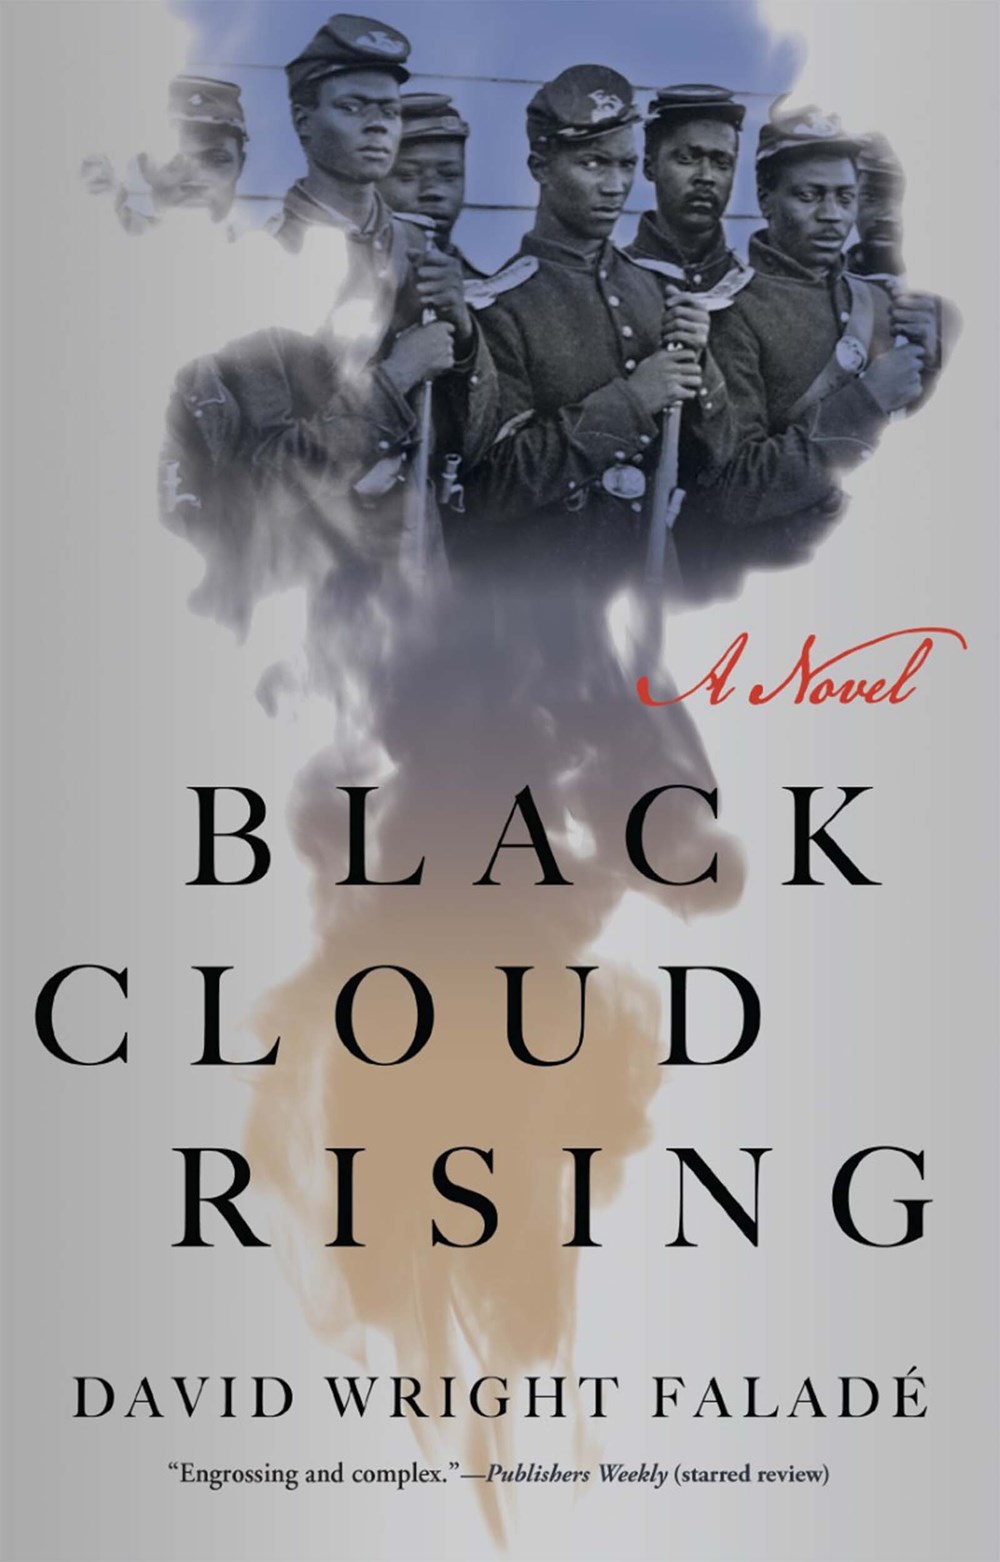 Black Cloud Rising by David Wright Falade